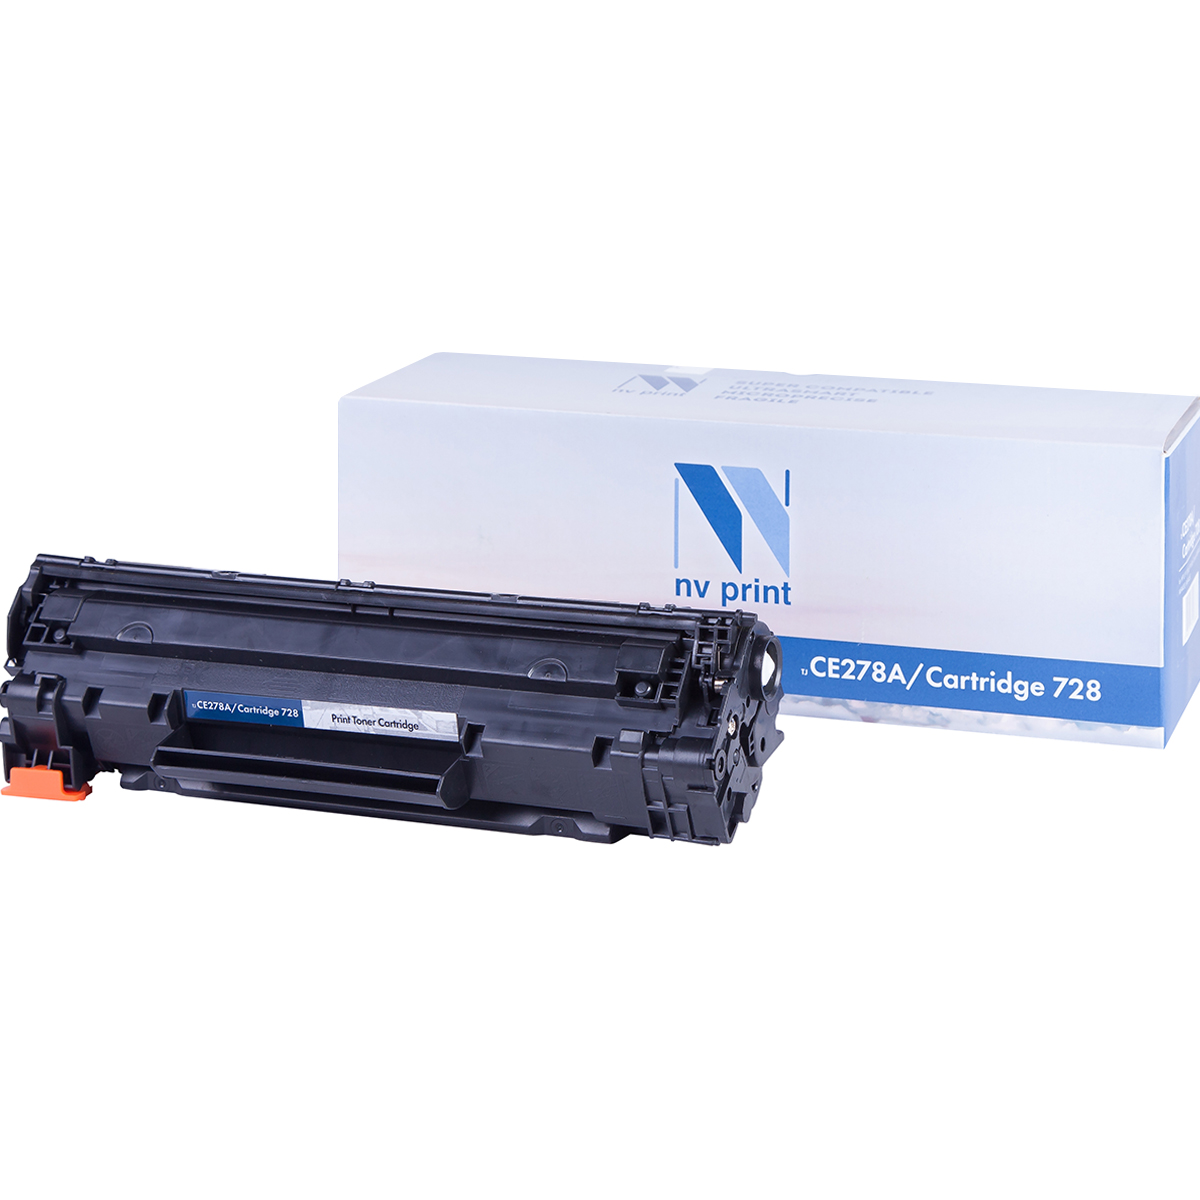   NV Print NV-CE278A/728 (HP LaserJet Pro P1566, M1536dnf, P1606dn, Canon MF4580, 4570, 4550, 4450, 4430, 4410, 2100.)